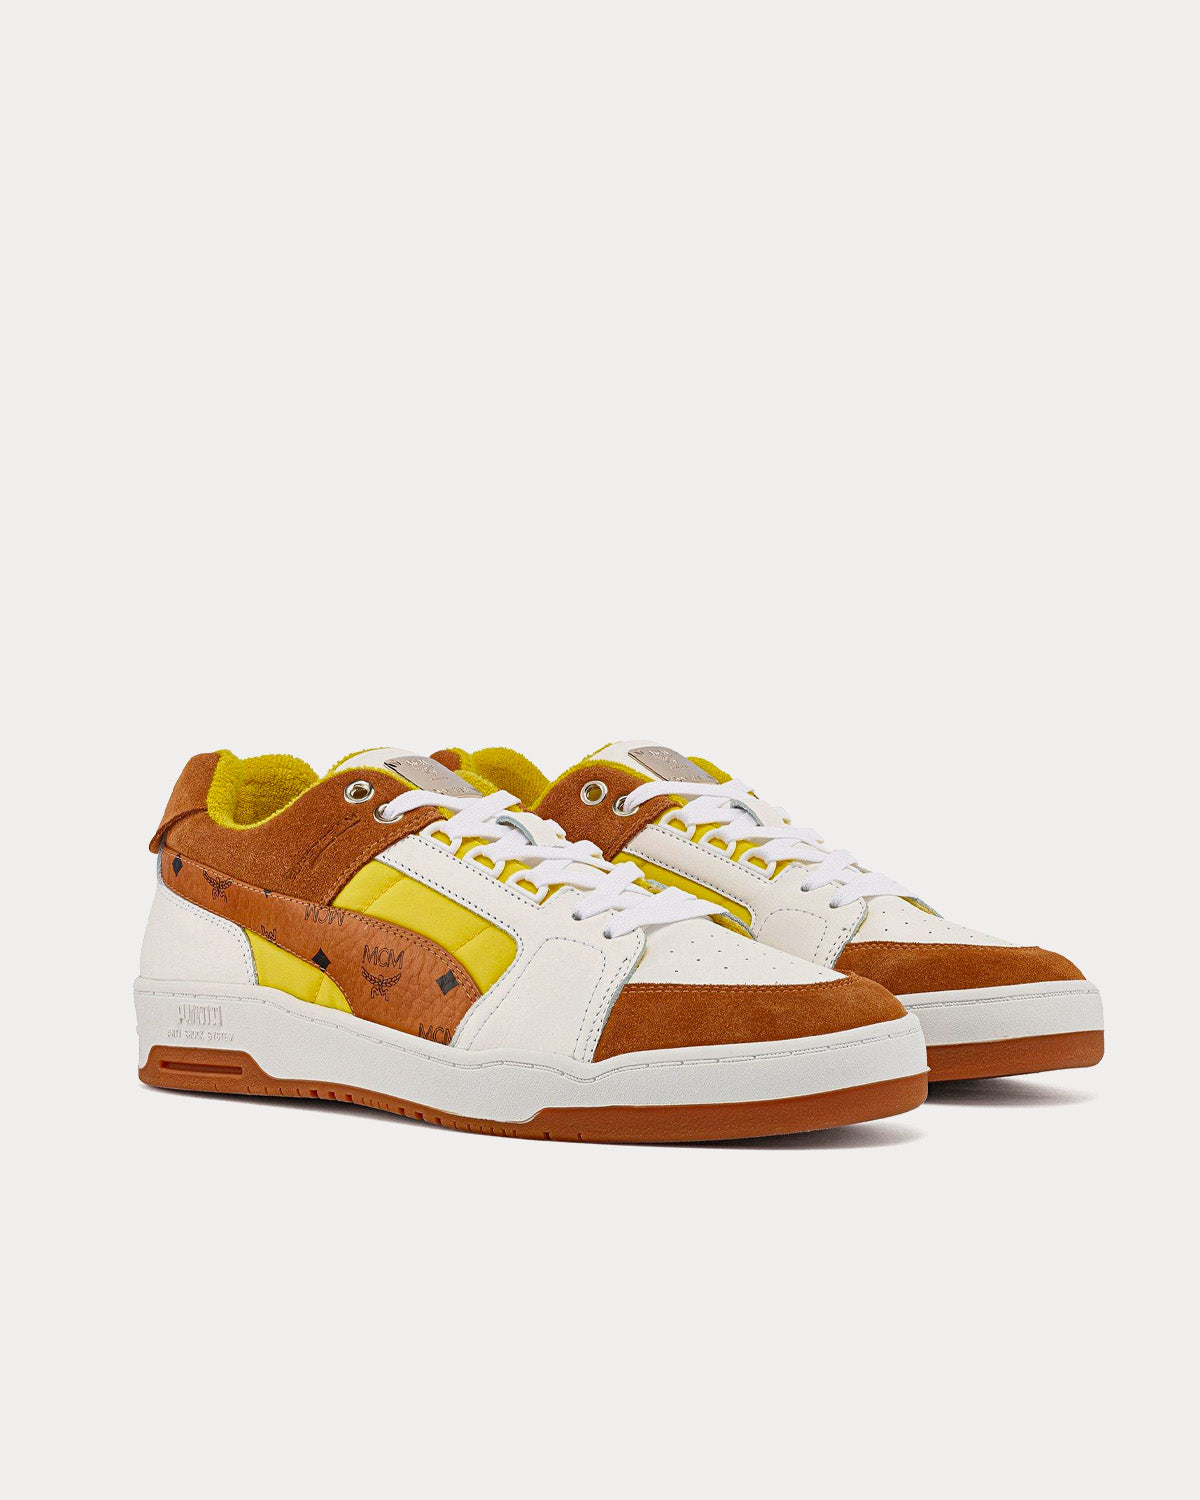 Puma - x MCM Slipstream Yellow / Bright White / Vibrant Yellow Low Top Sneakers